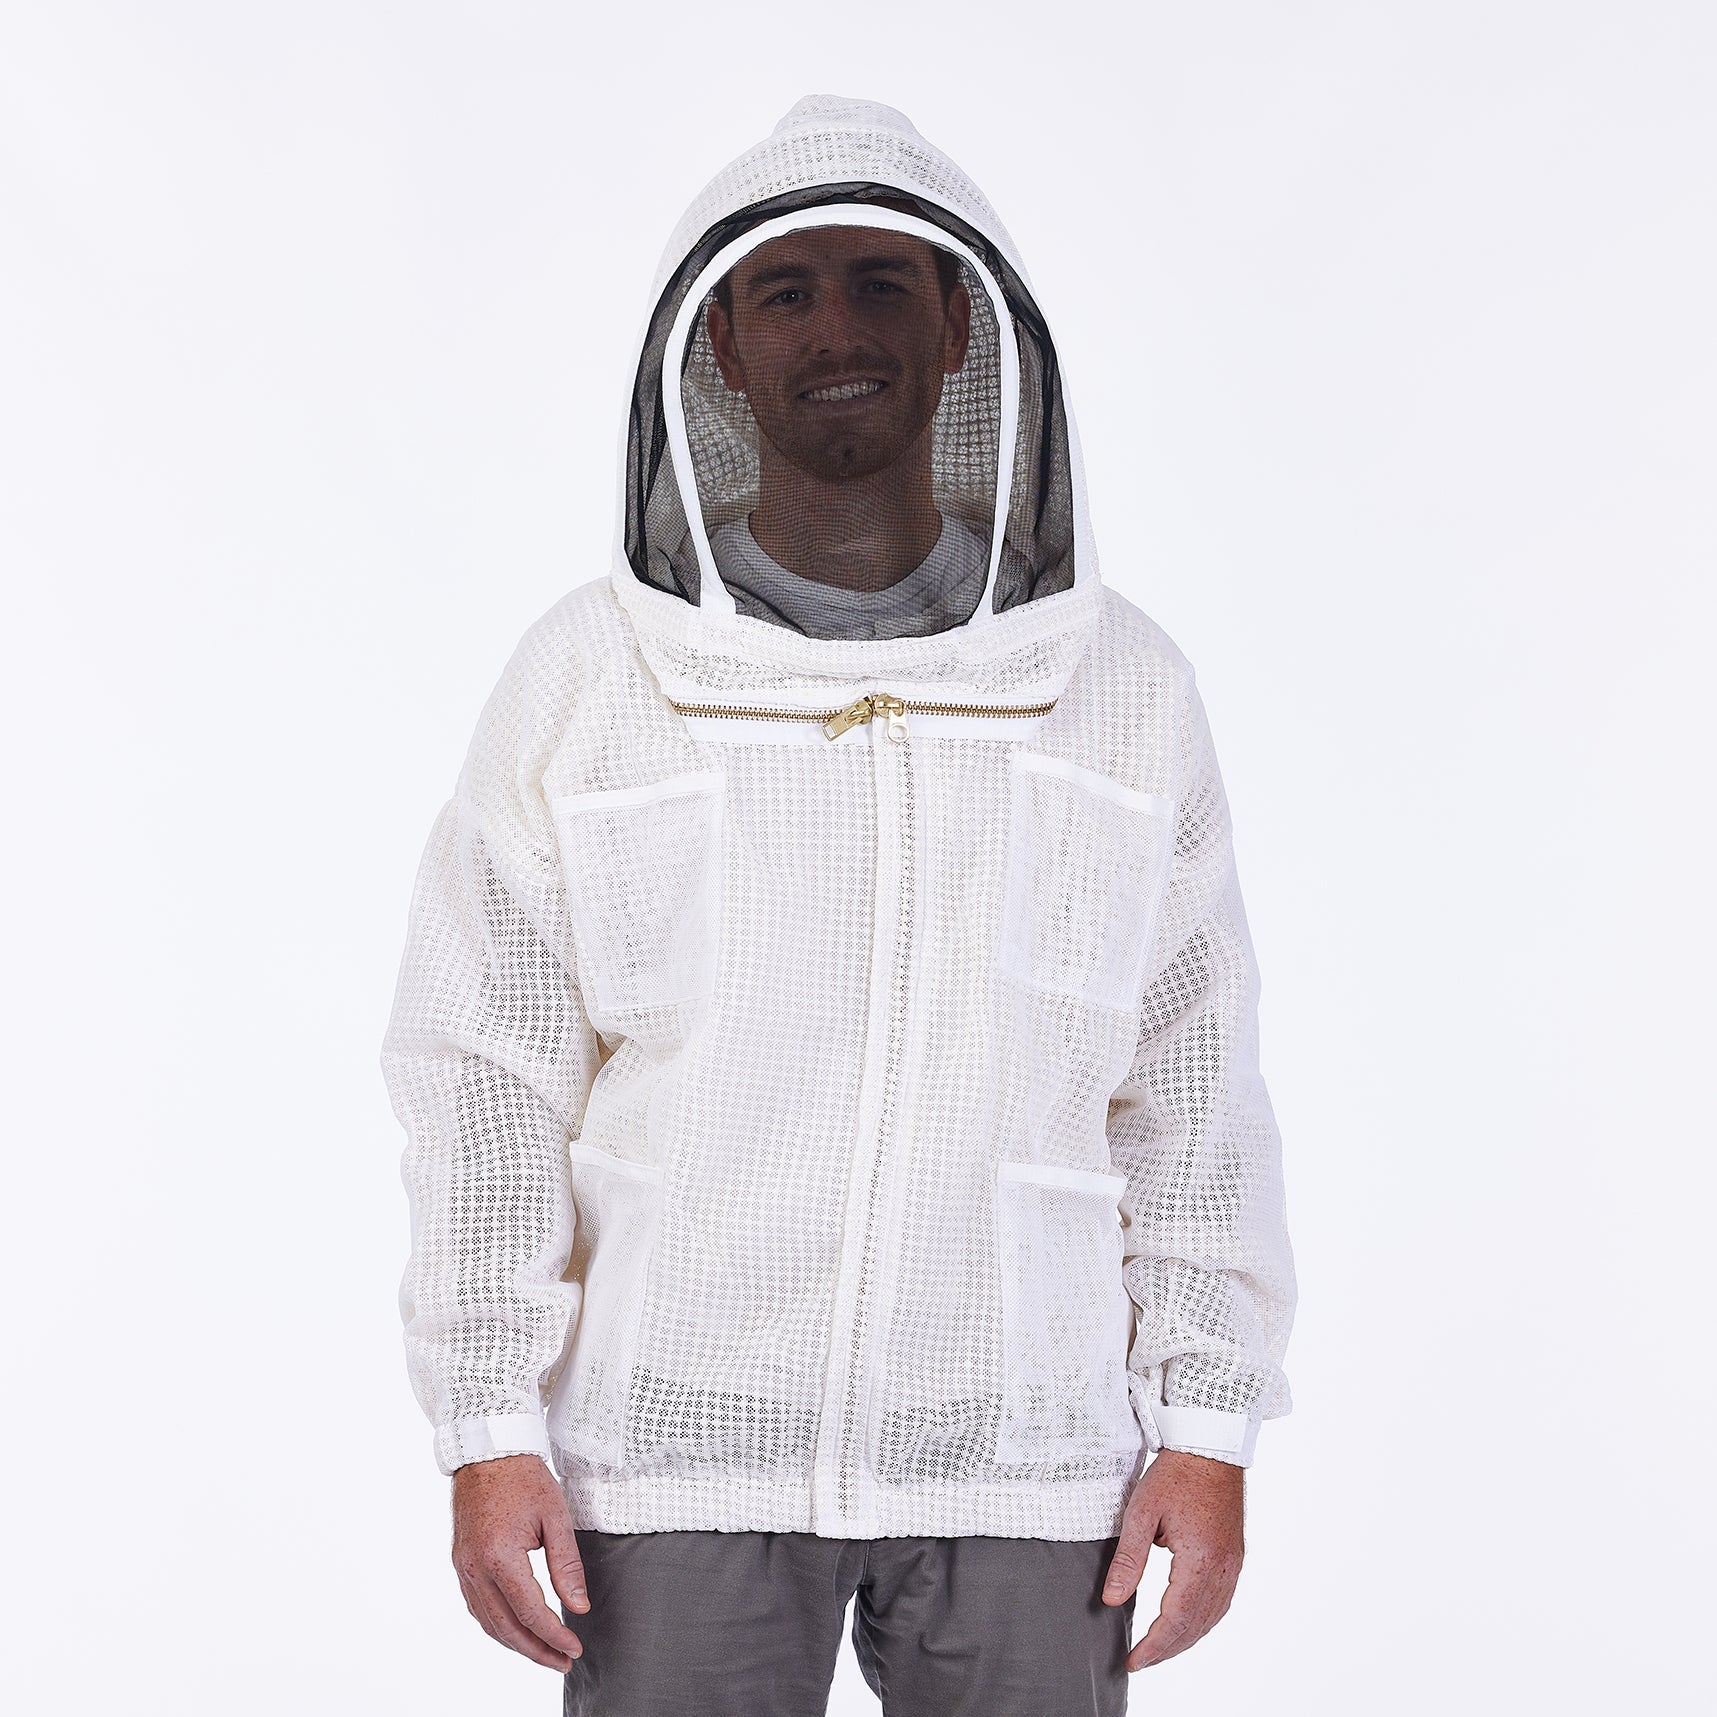 Ultra Breeze bee keeping suit Medium EUC Beekeeping The Best With